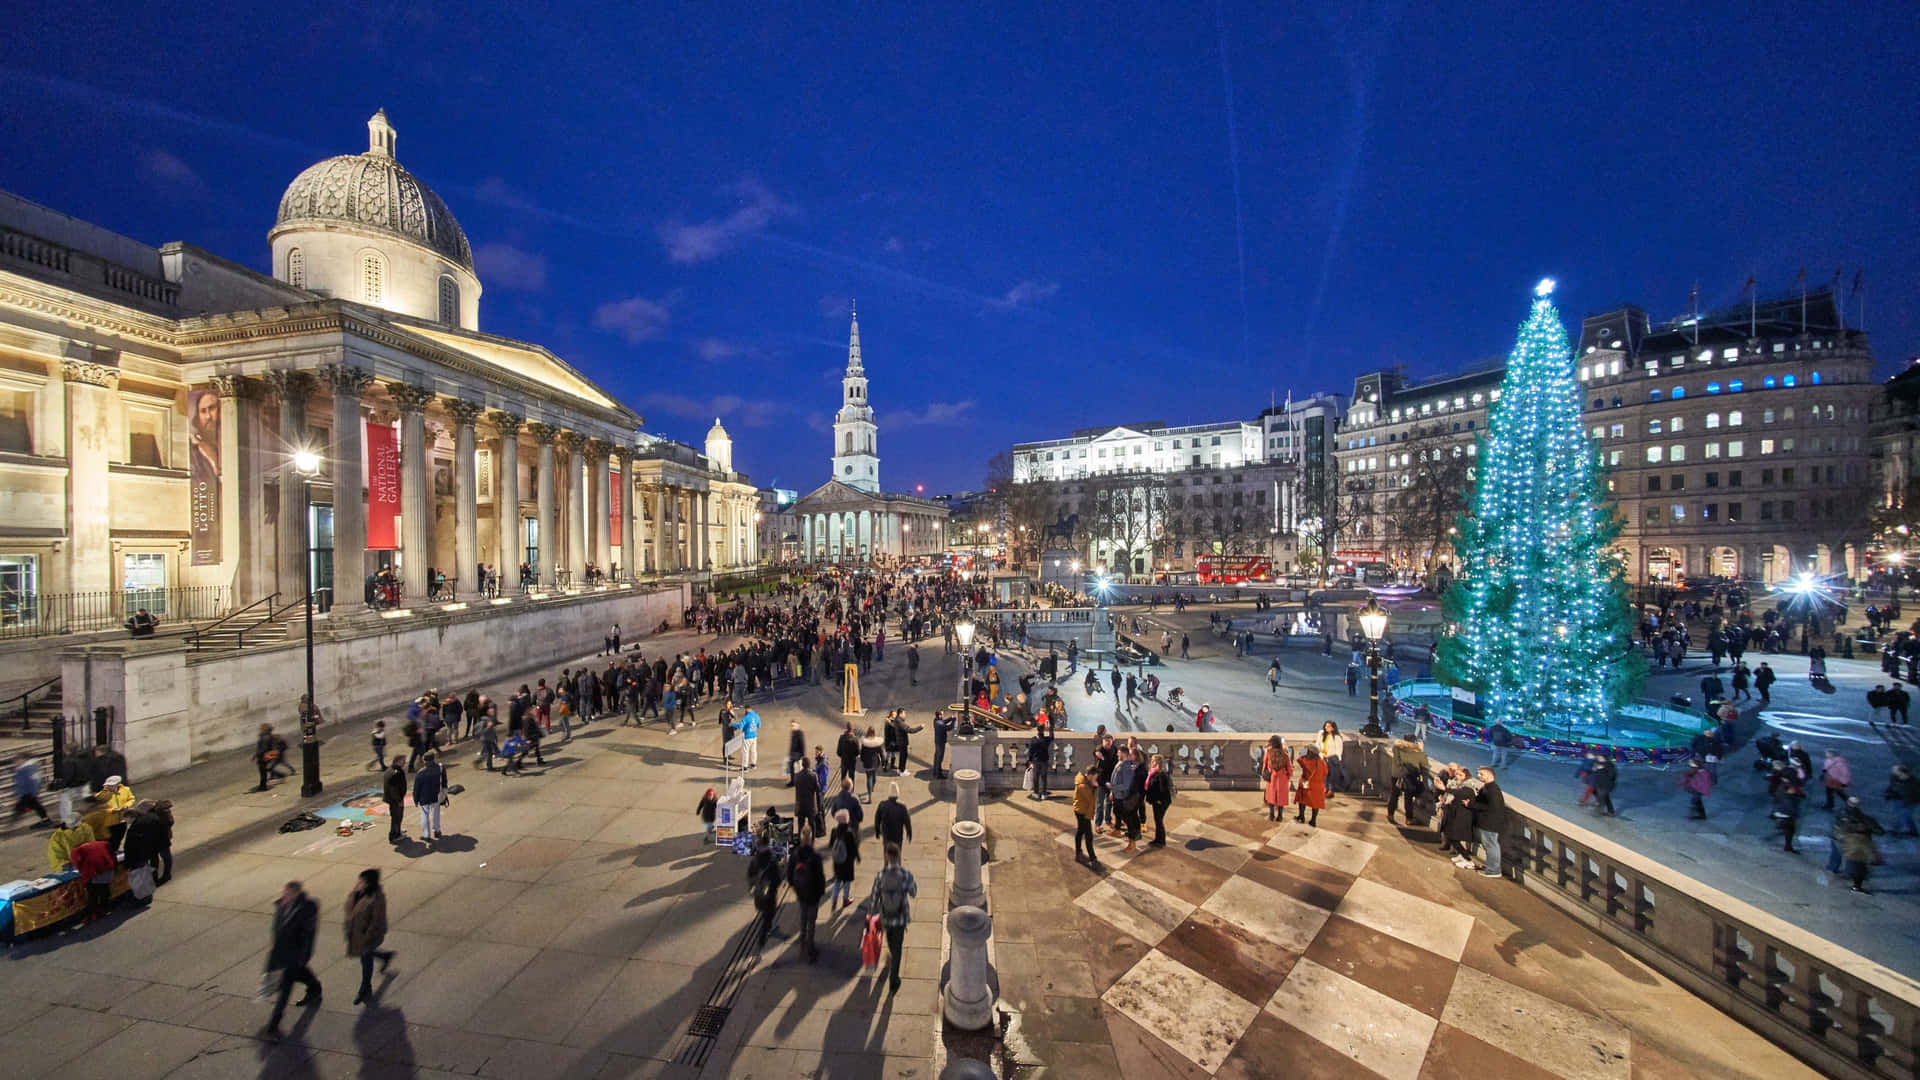 Trafalgar Square Christmas In London Background